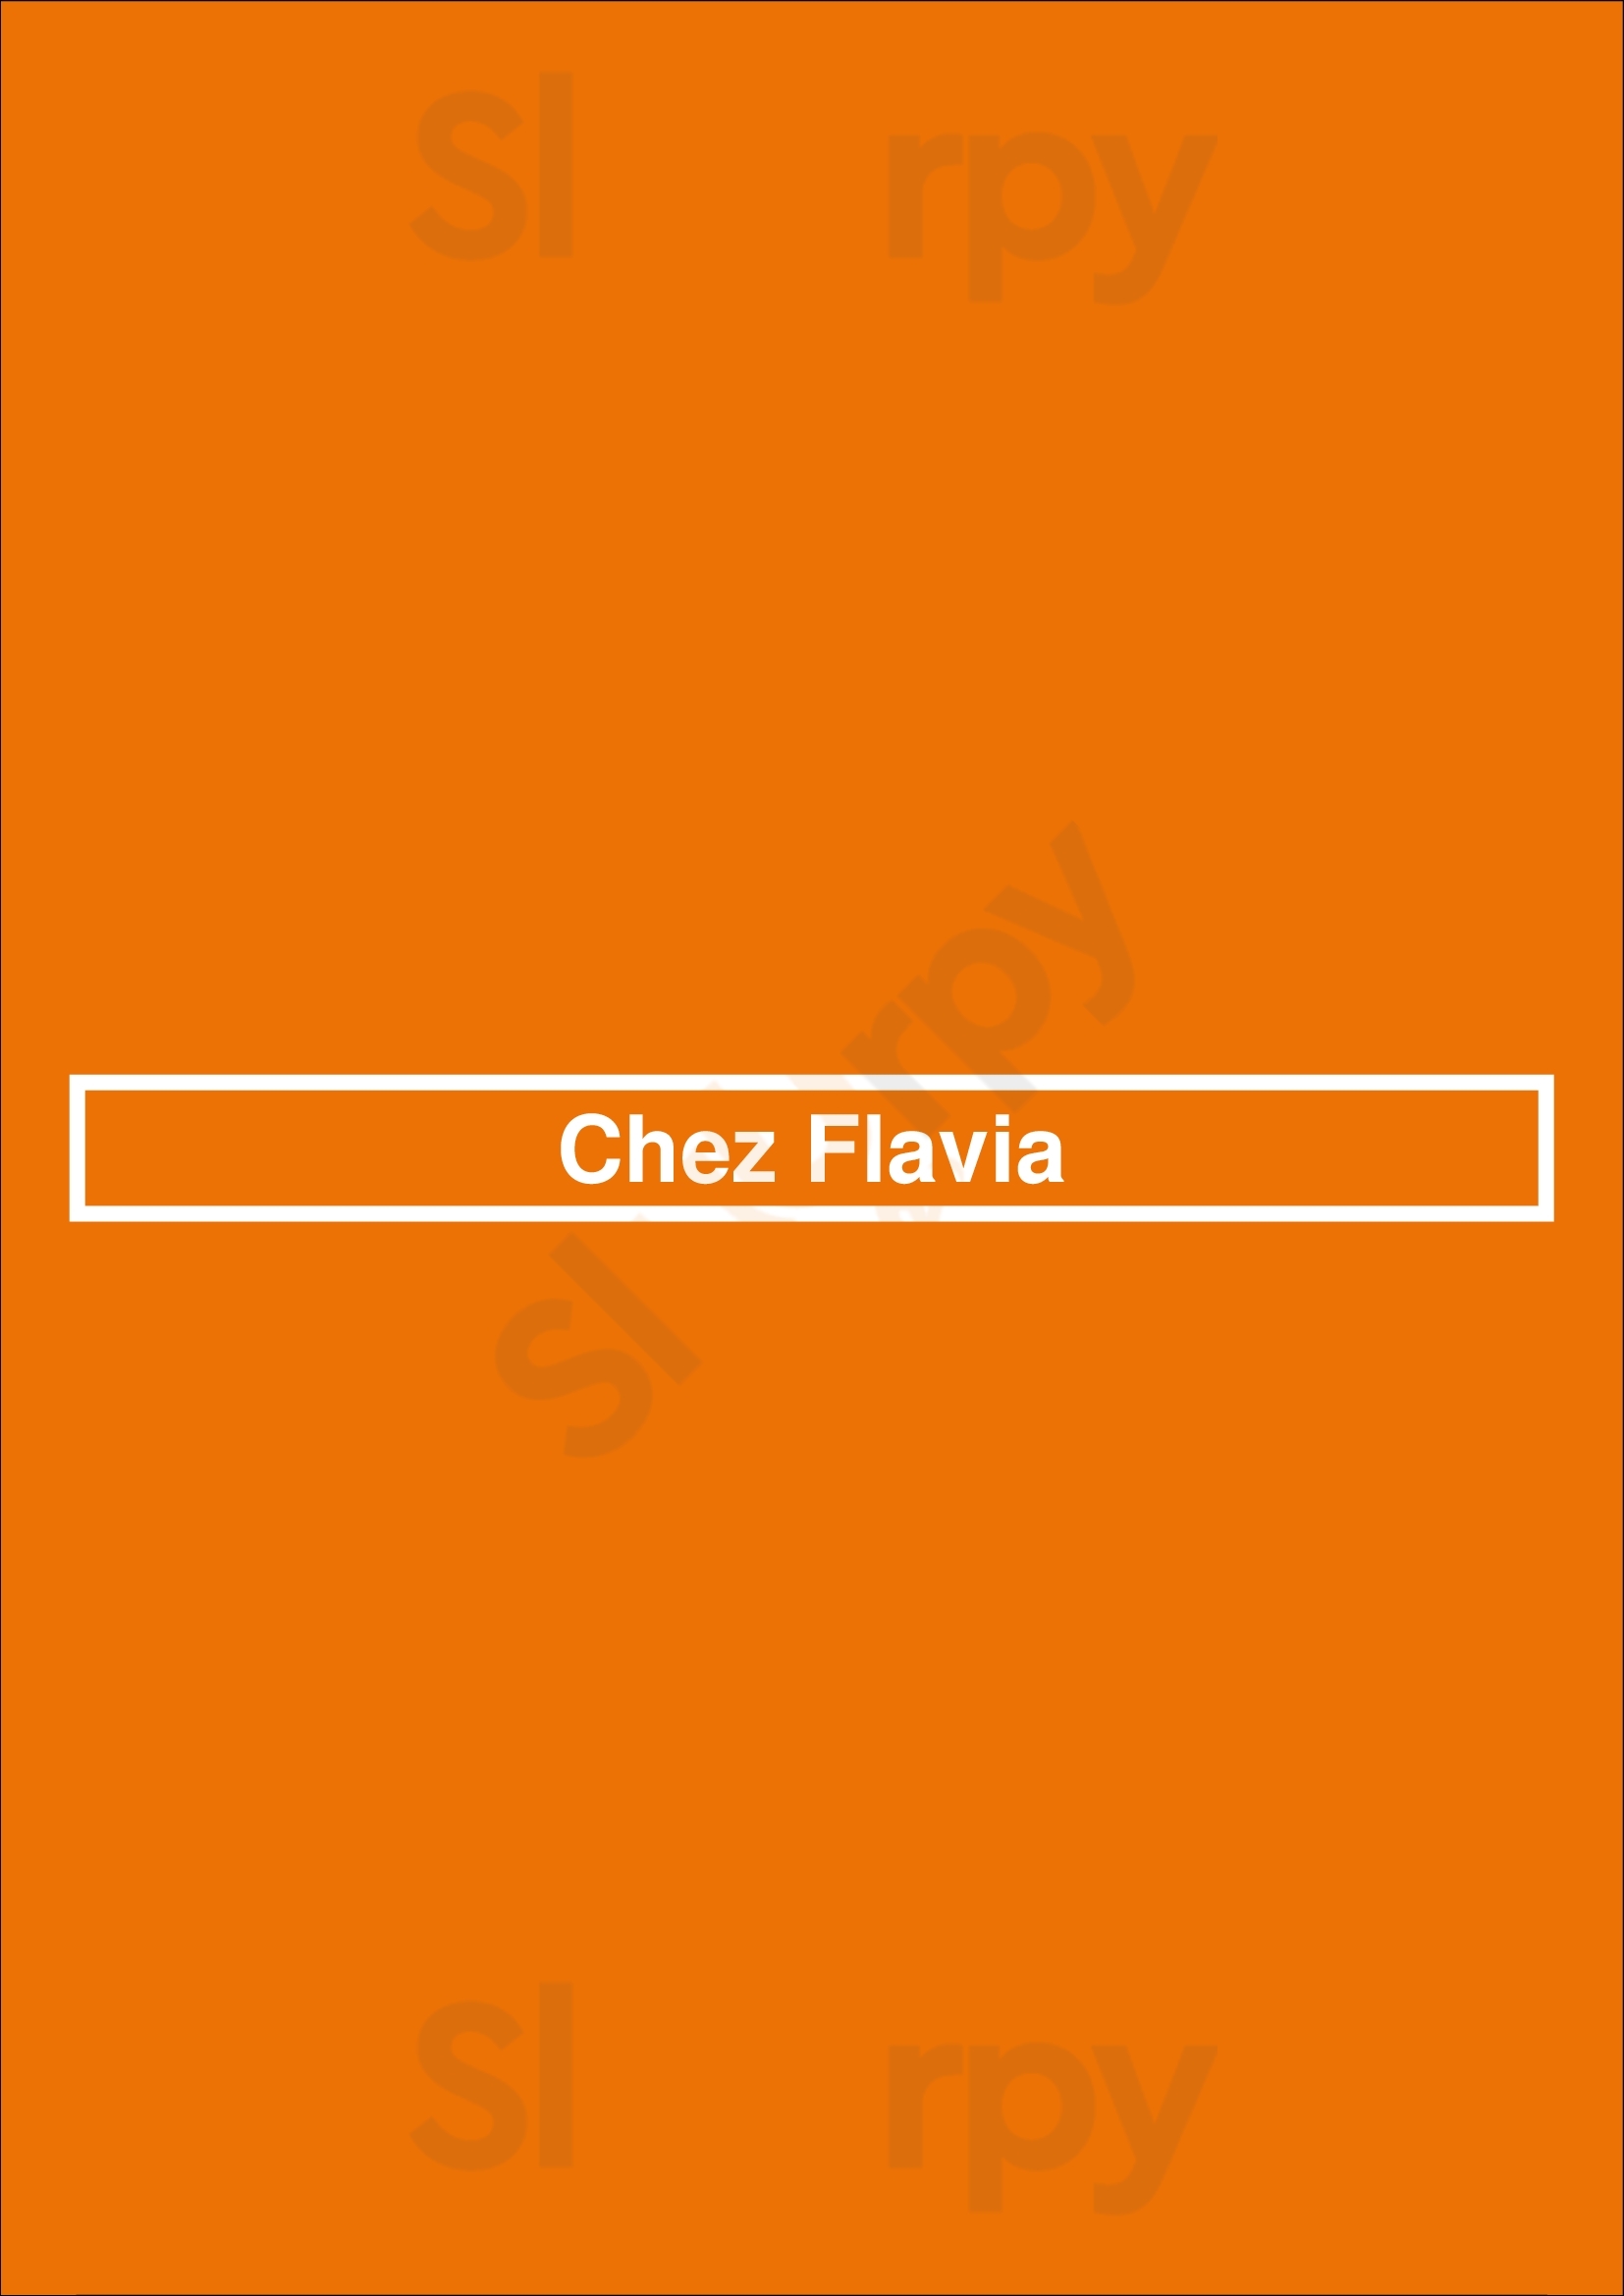 Chez Flavia Caen Menu - 1